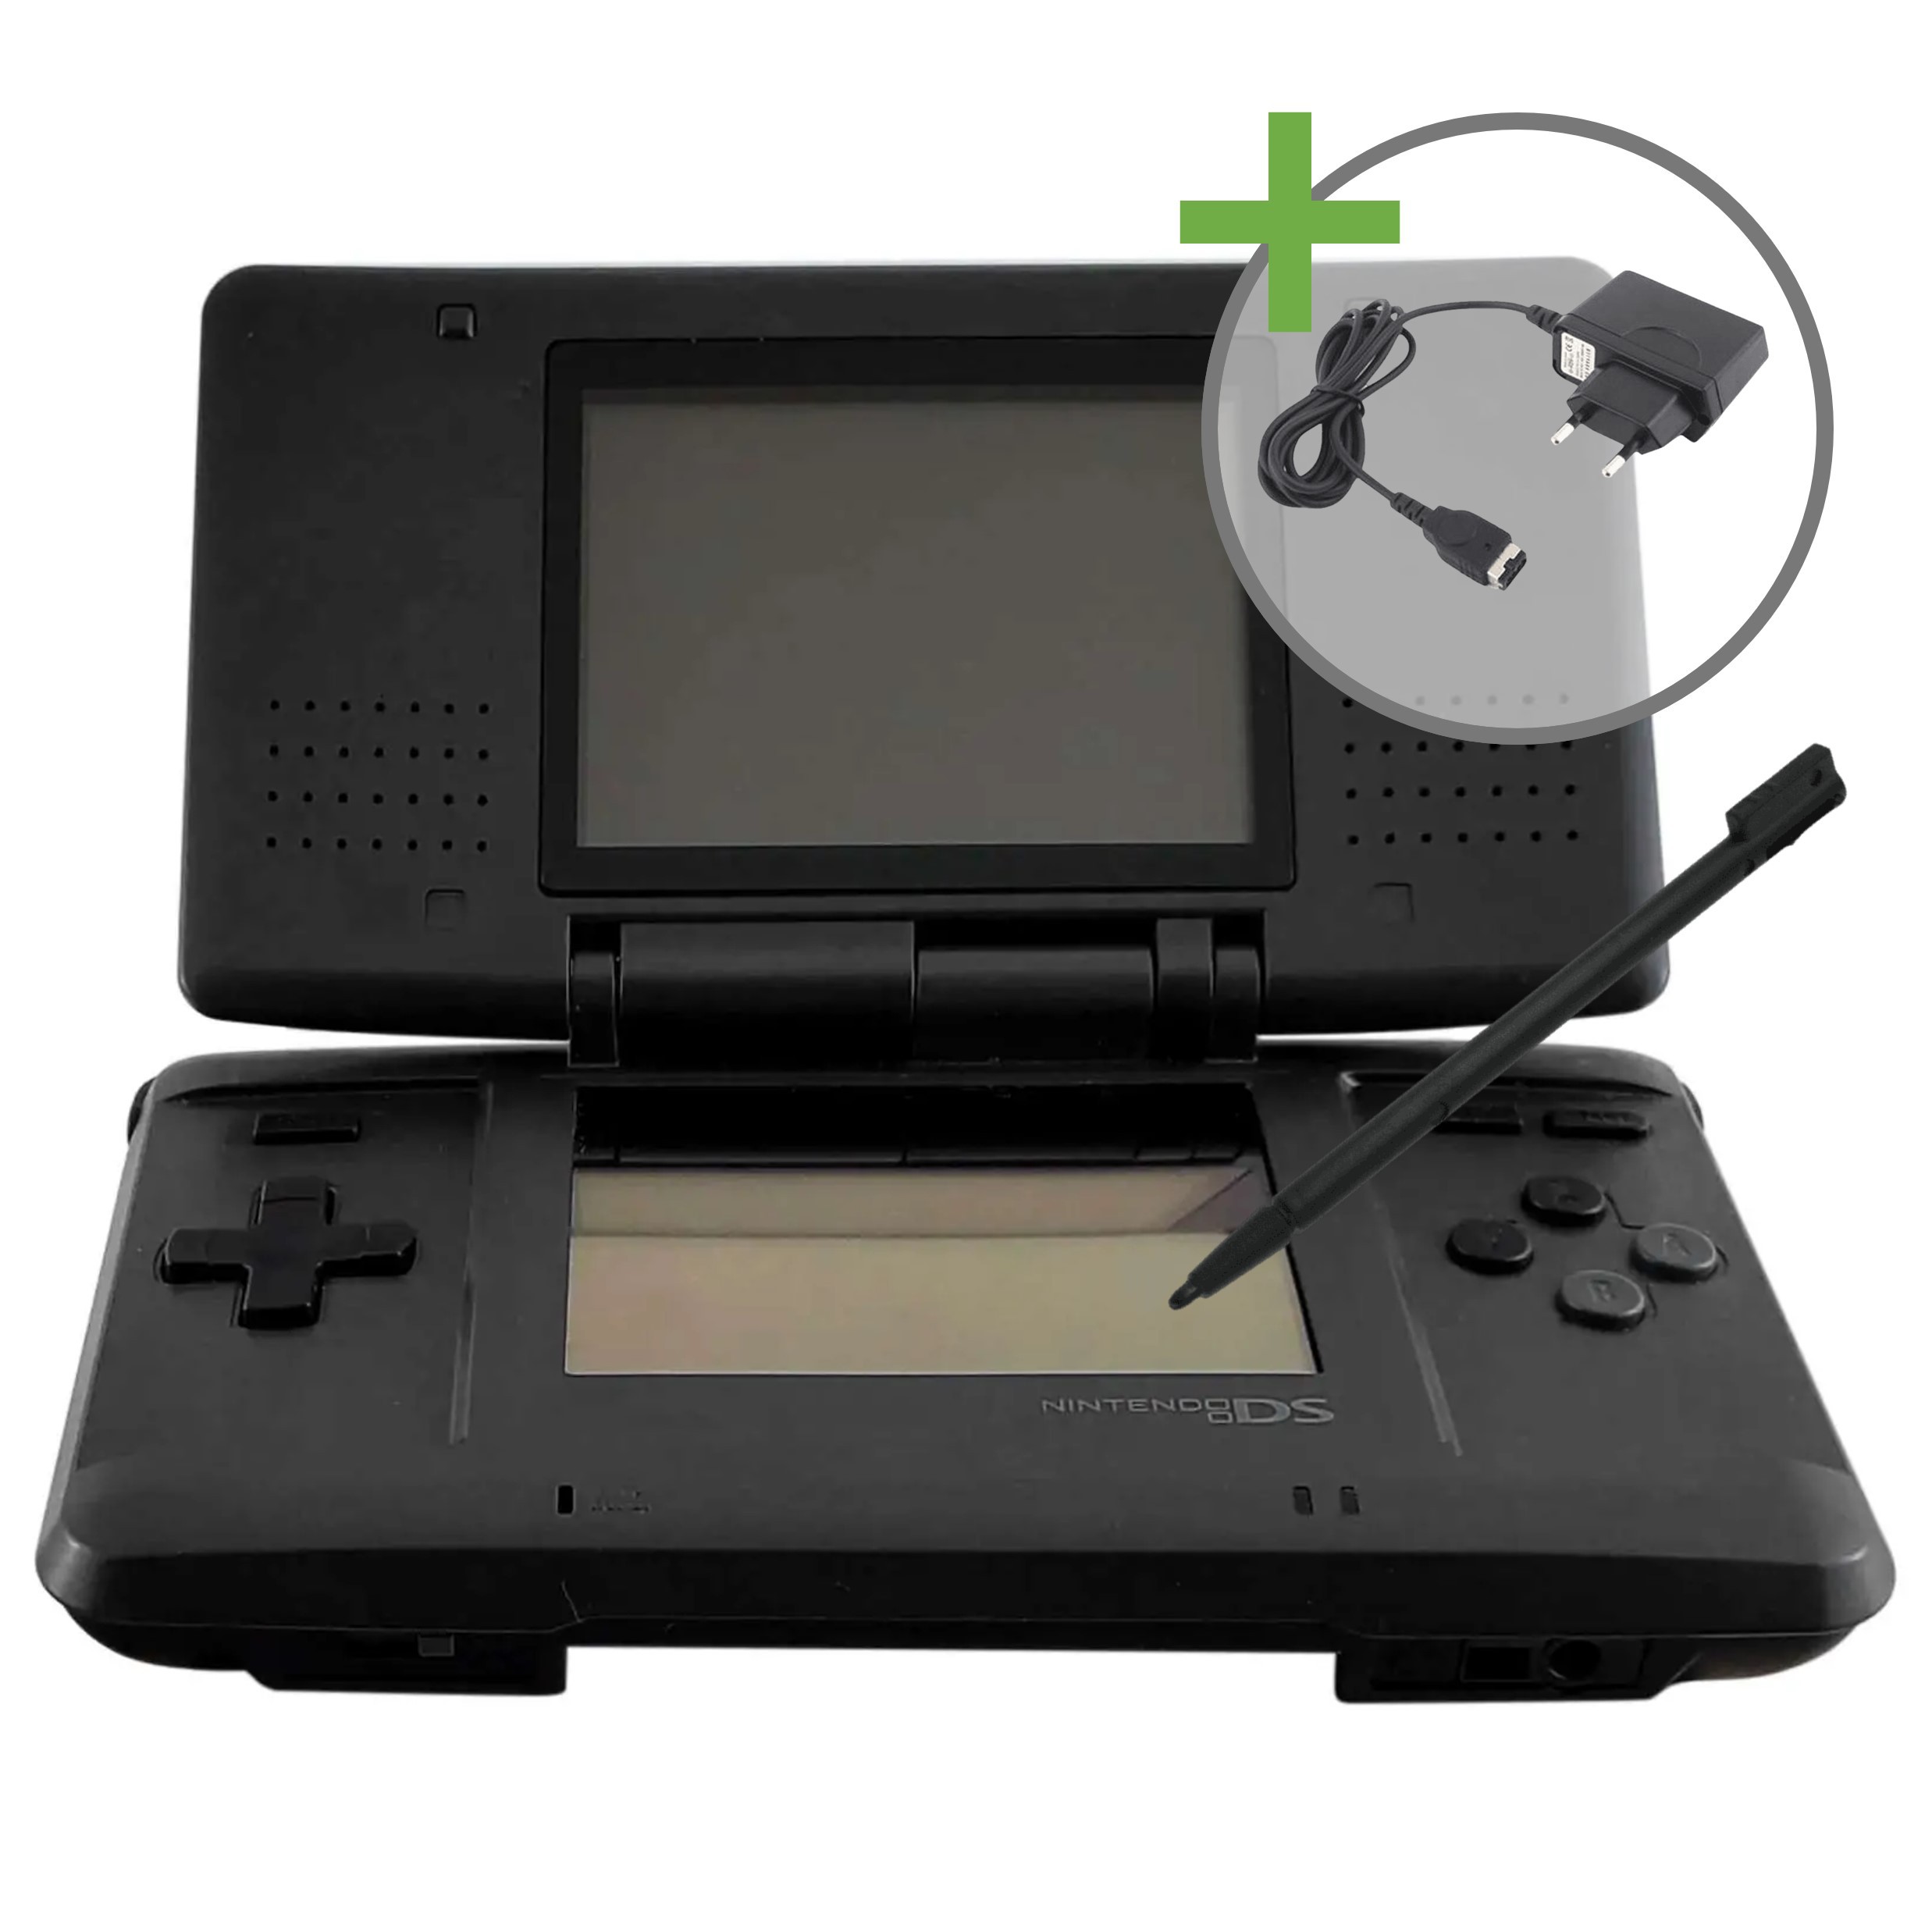 Nintendo DS Original - Smart Black - Nintendo DS Hardware